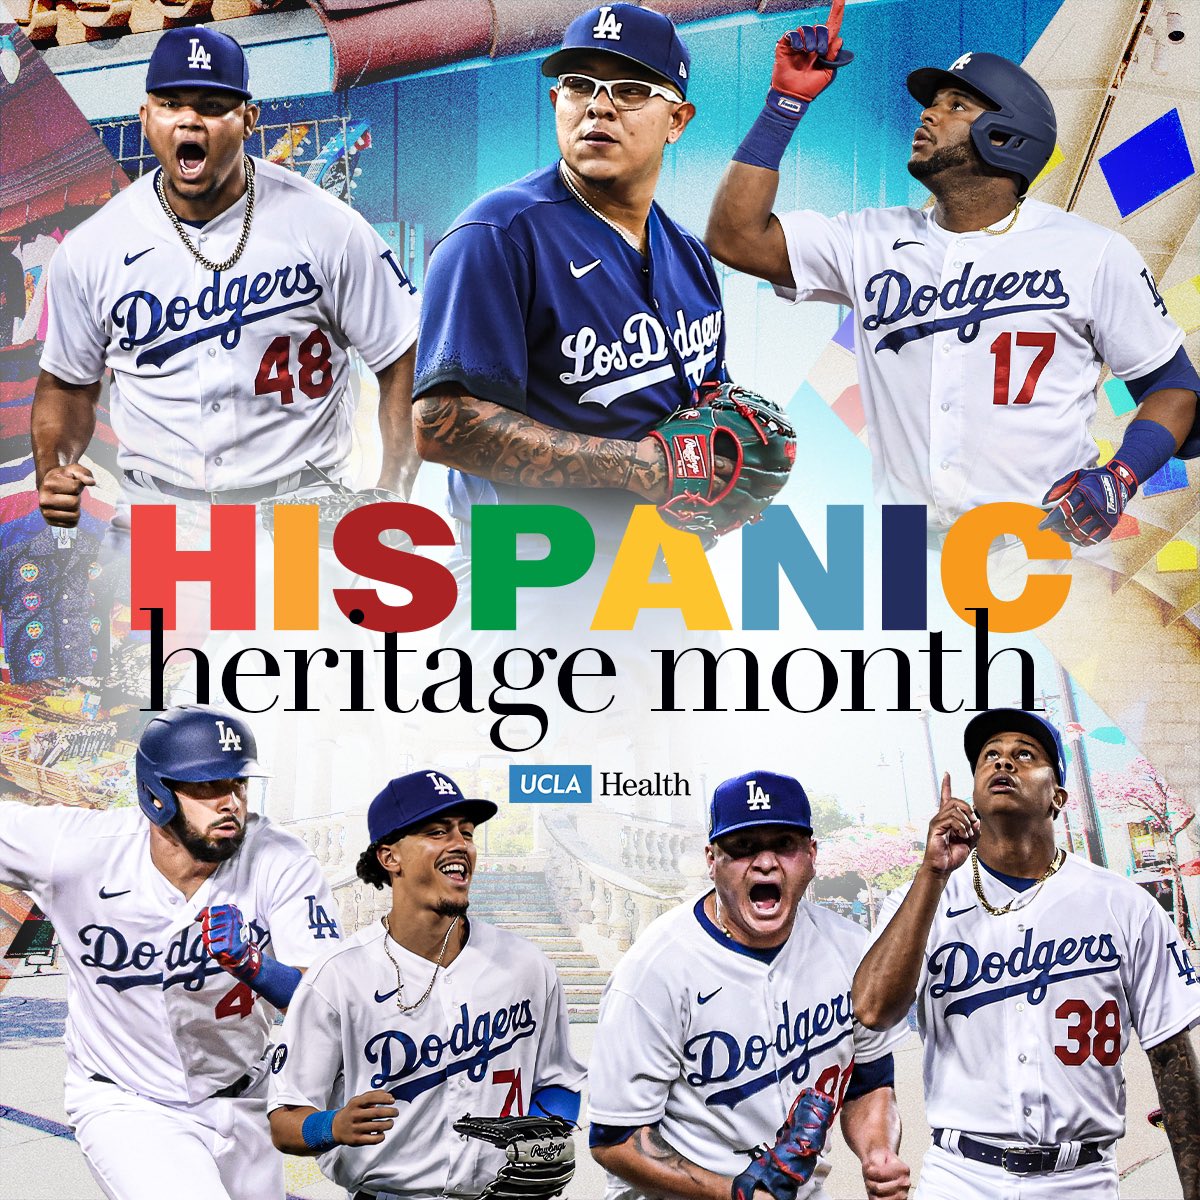 Los Angeles Dodgers on X: Happy #HispanicHeritageMonth! We look